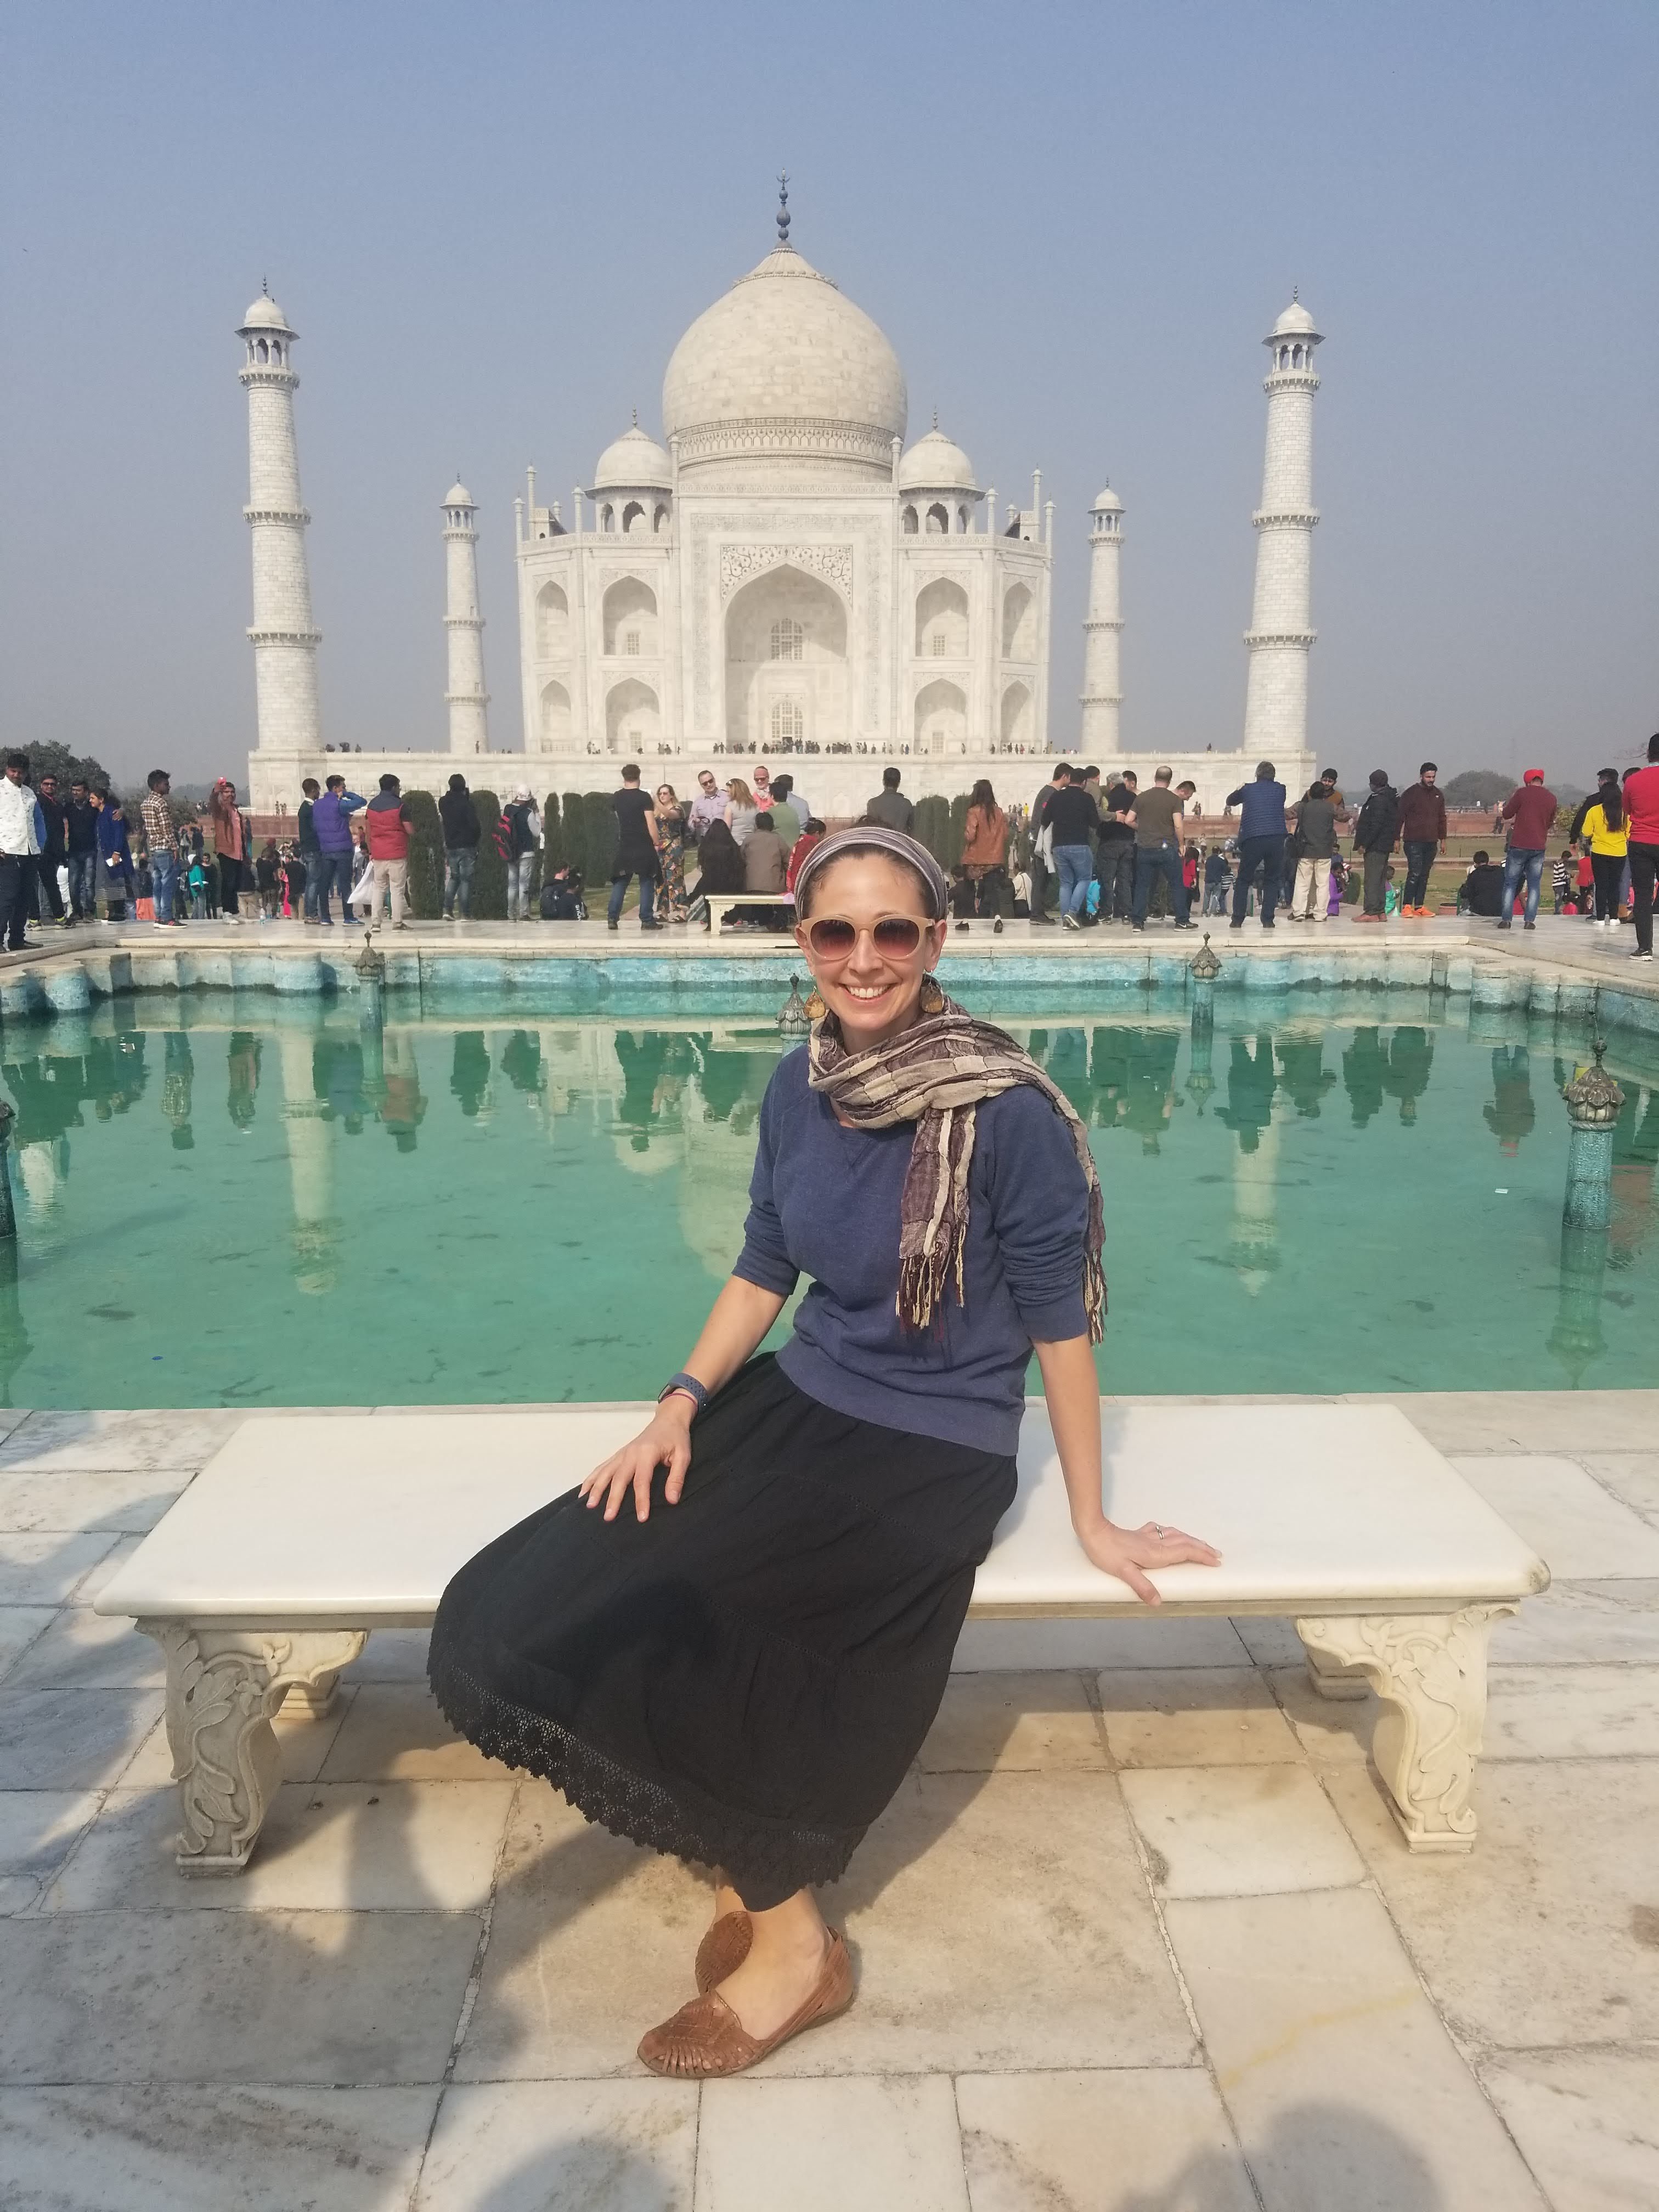 The author visiting the Taj Mahal